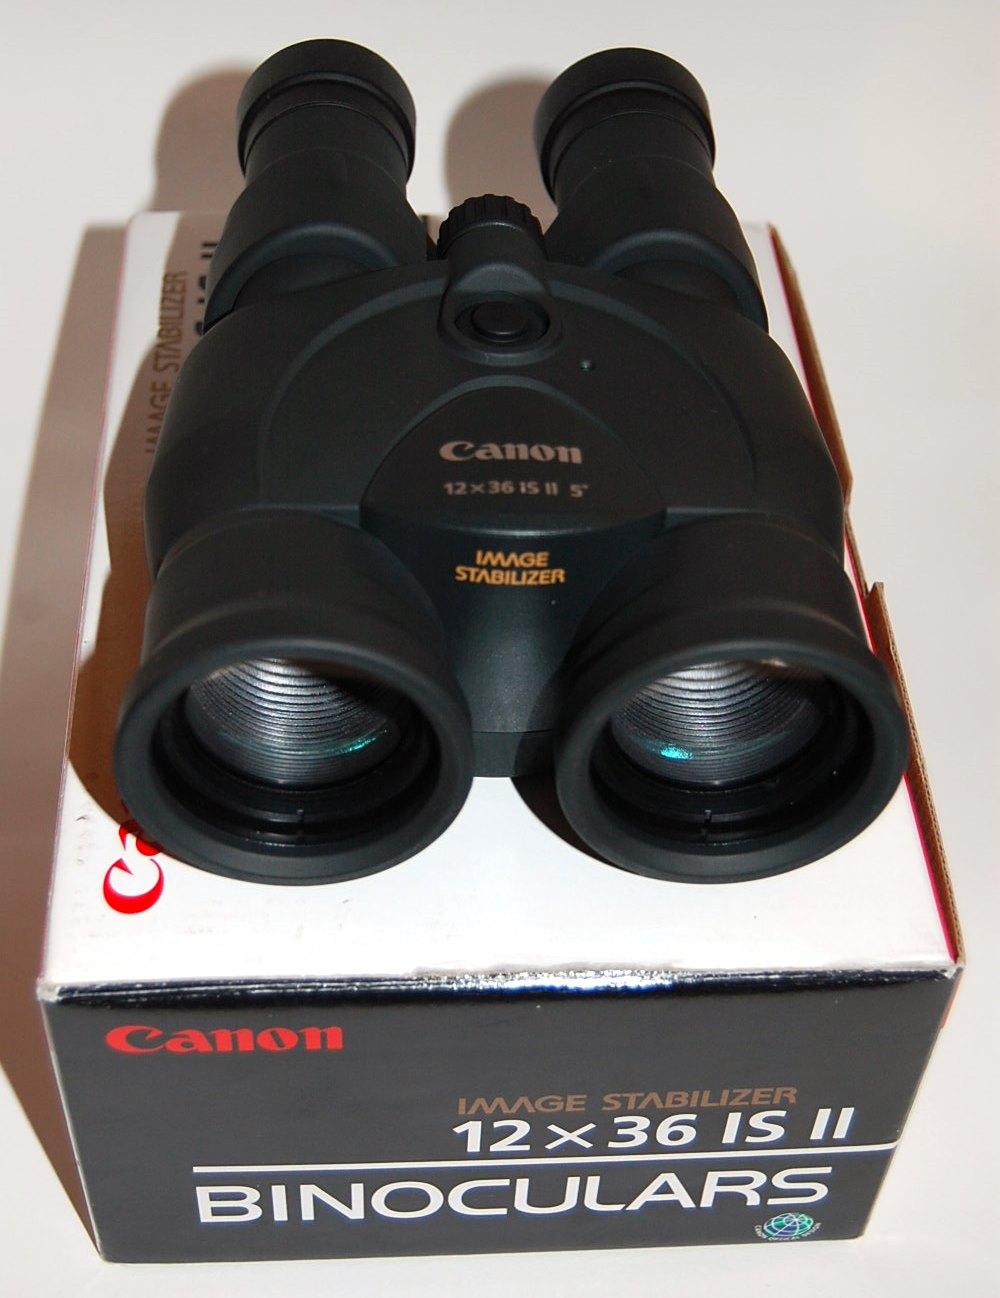 Canon 12x36 IS Binoculars Review